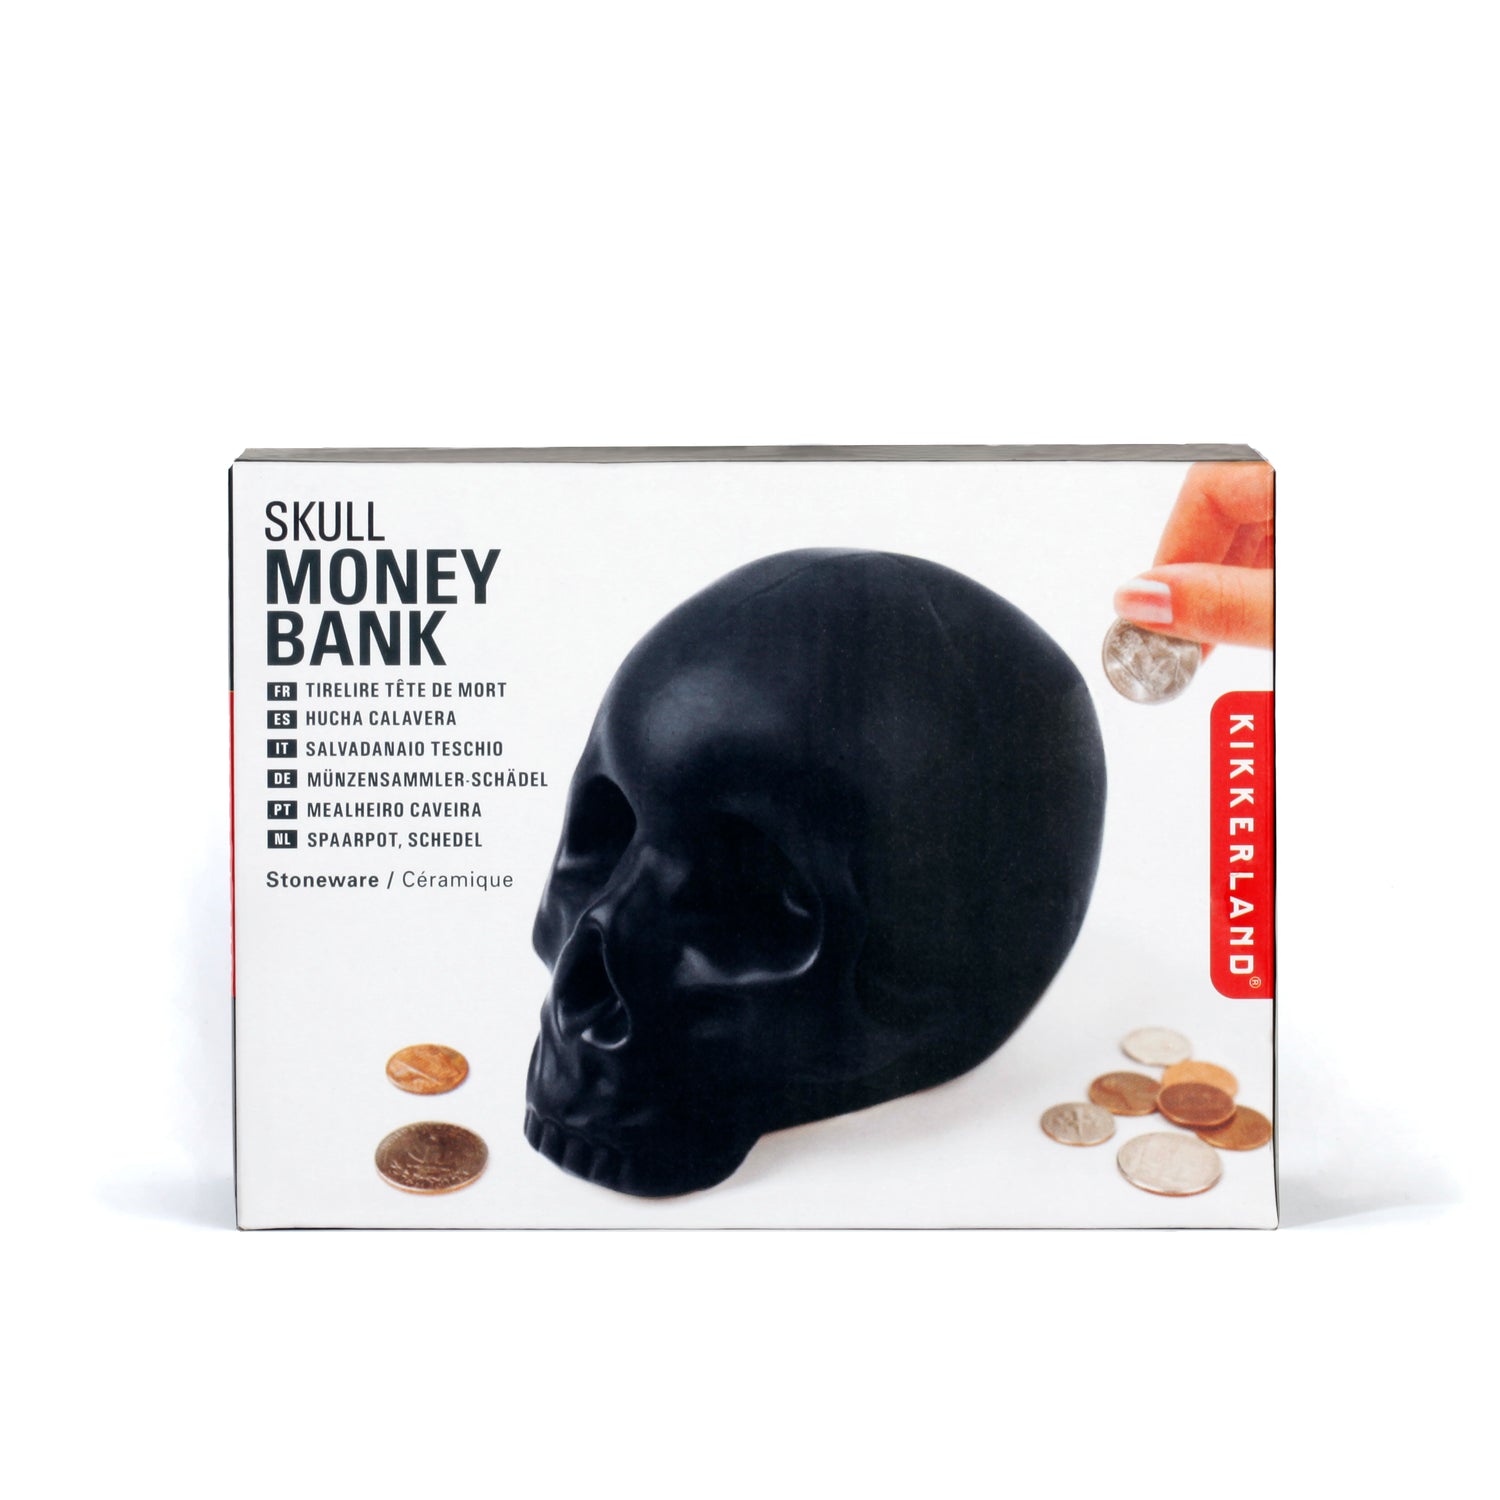 Skull Money Bank